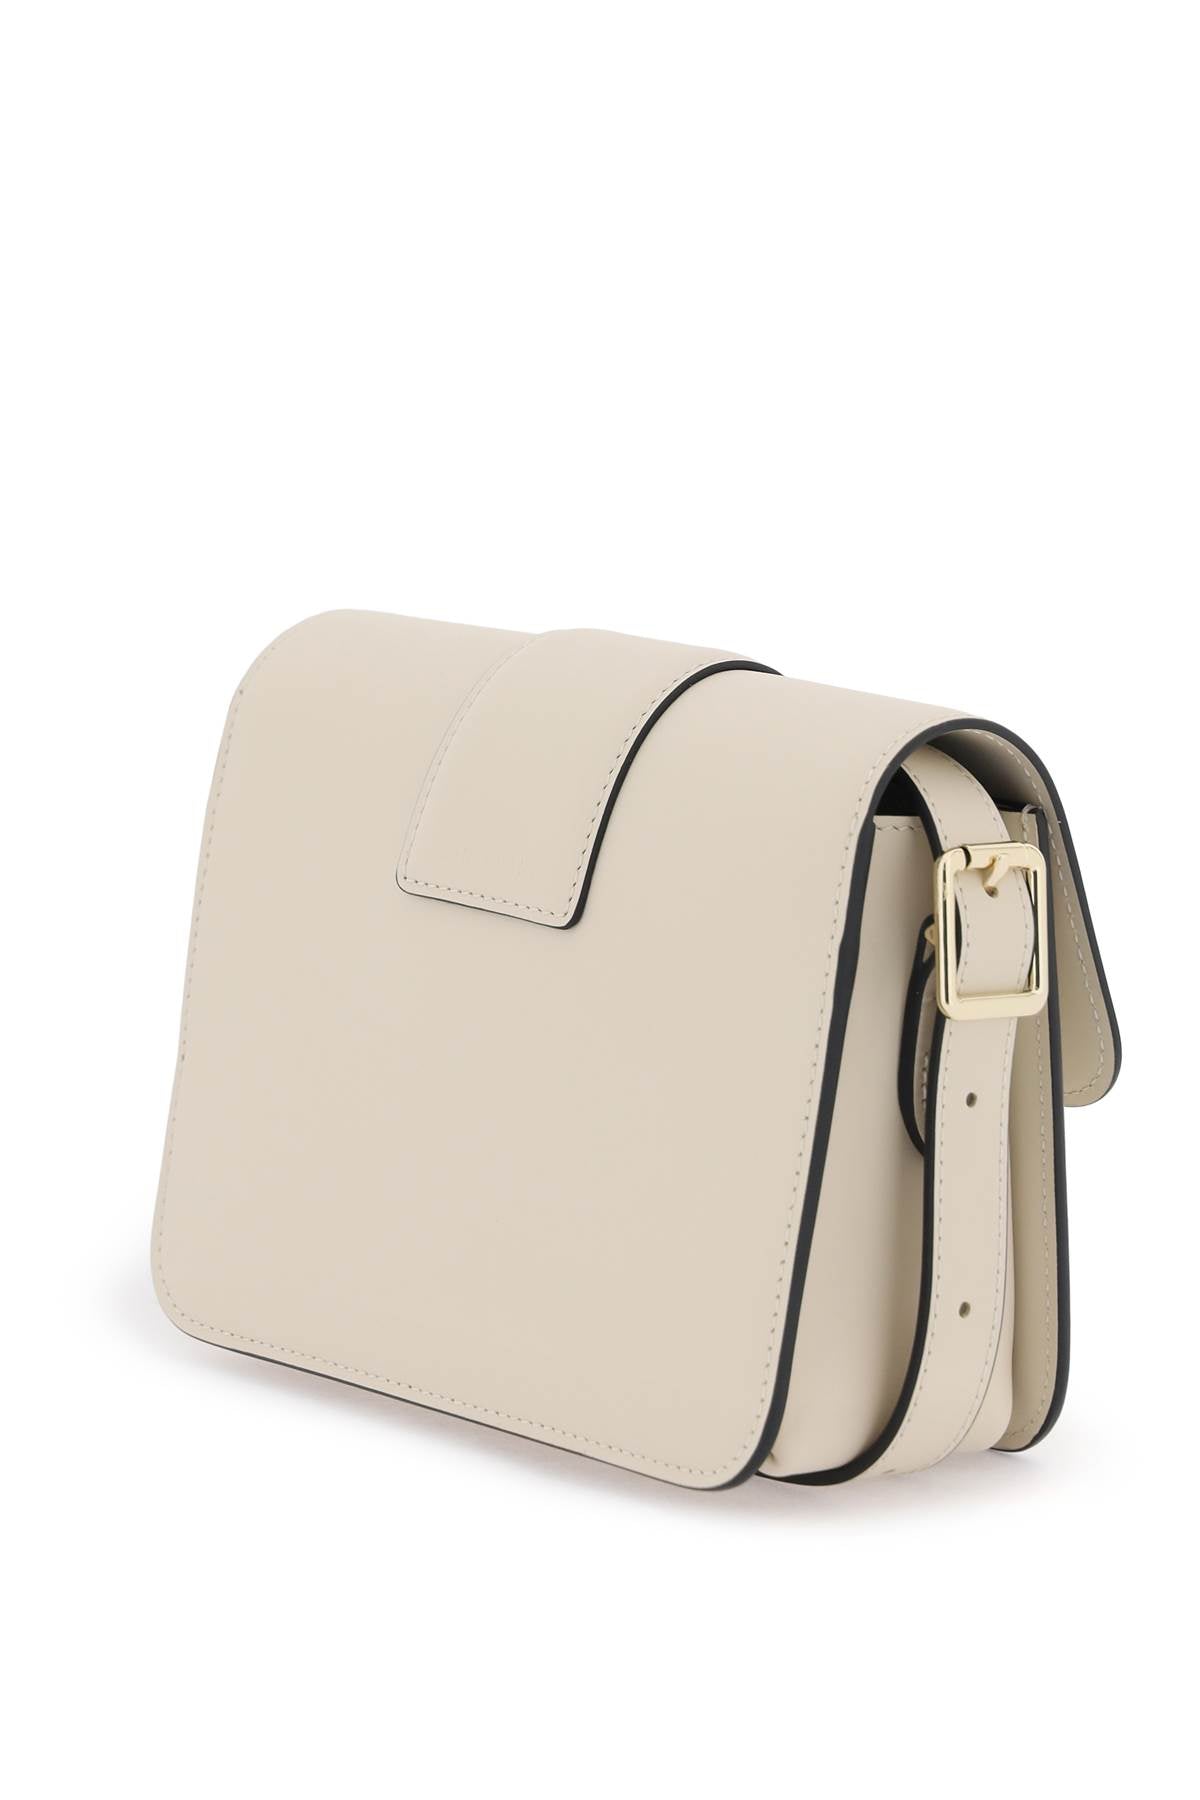 Longchamp box-trot small crossbody bag